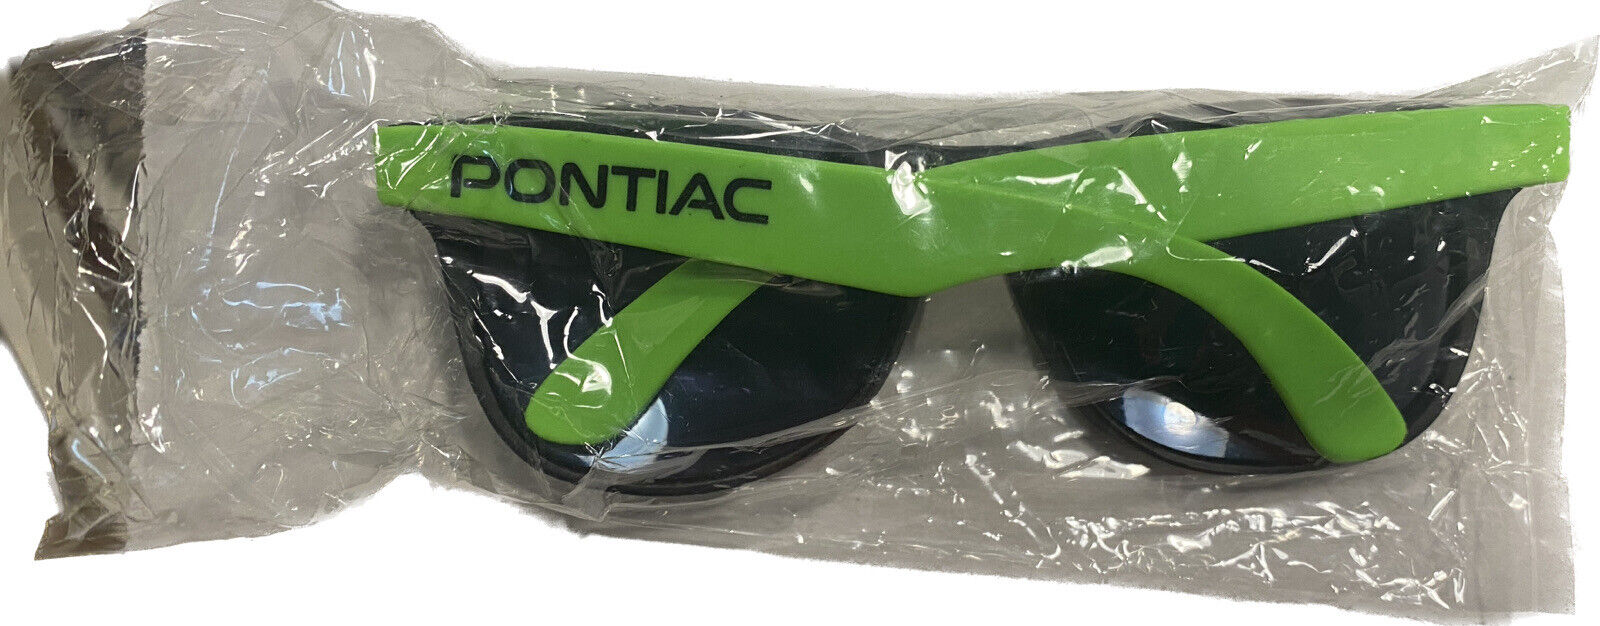 VTG Pontiac Promotional UV Sunglasses Neon Green, New Sealed, 1990’s D